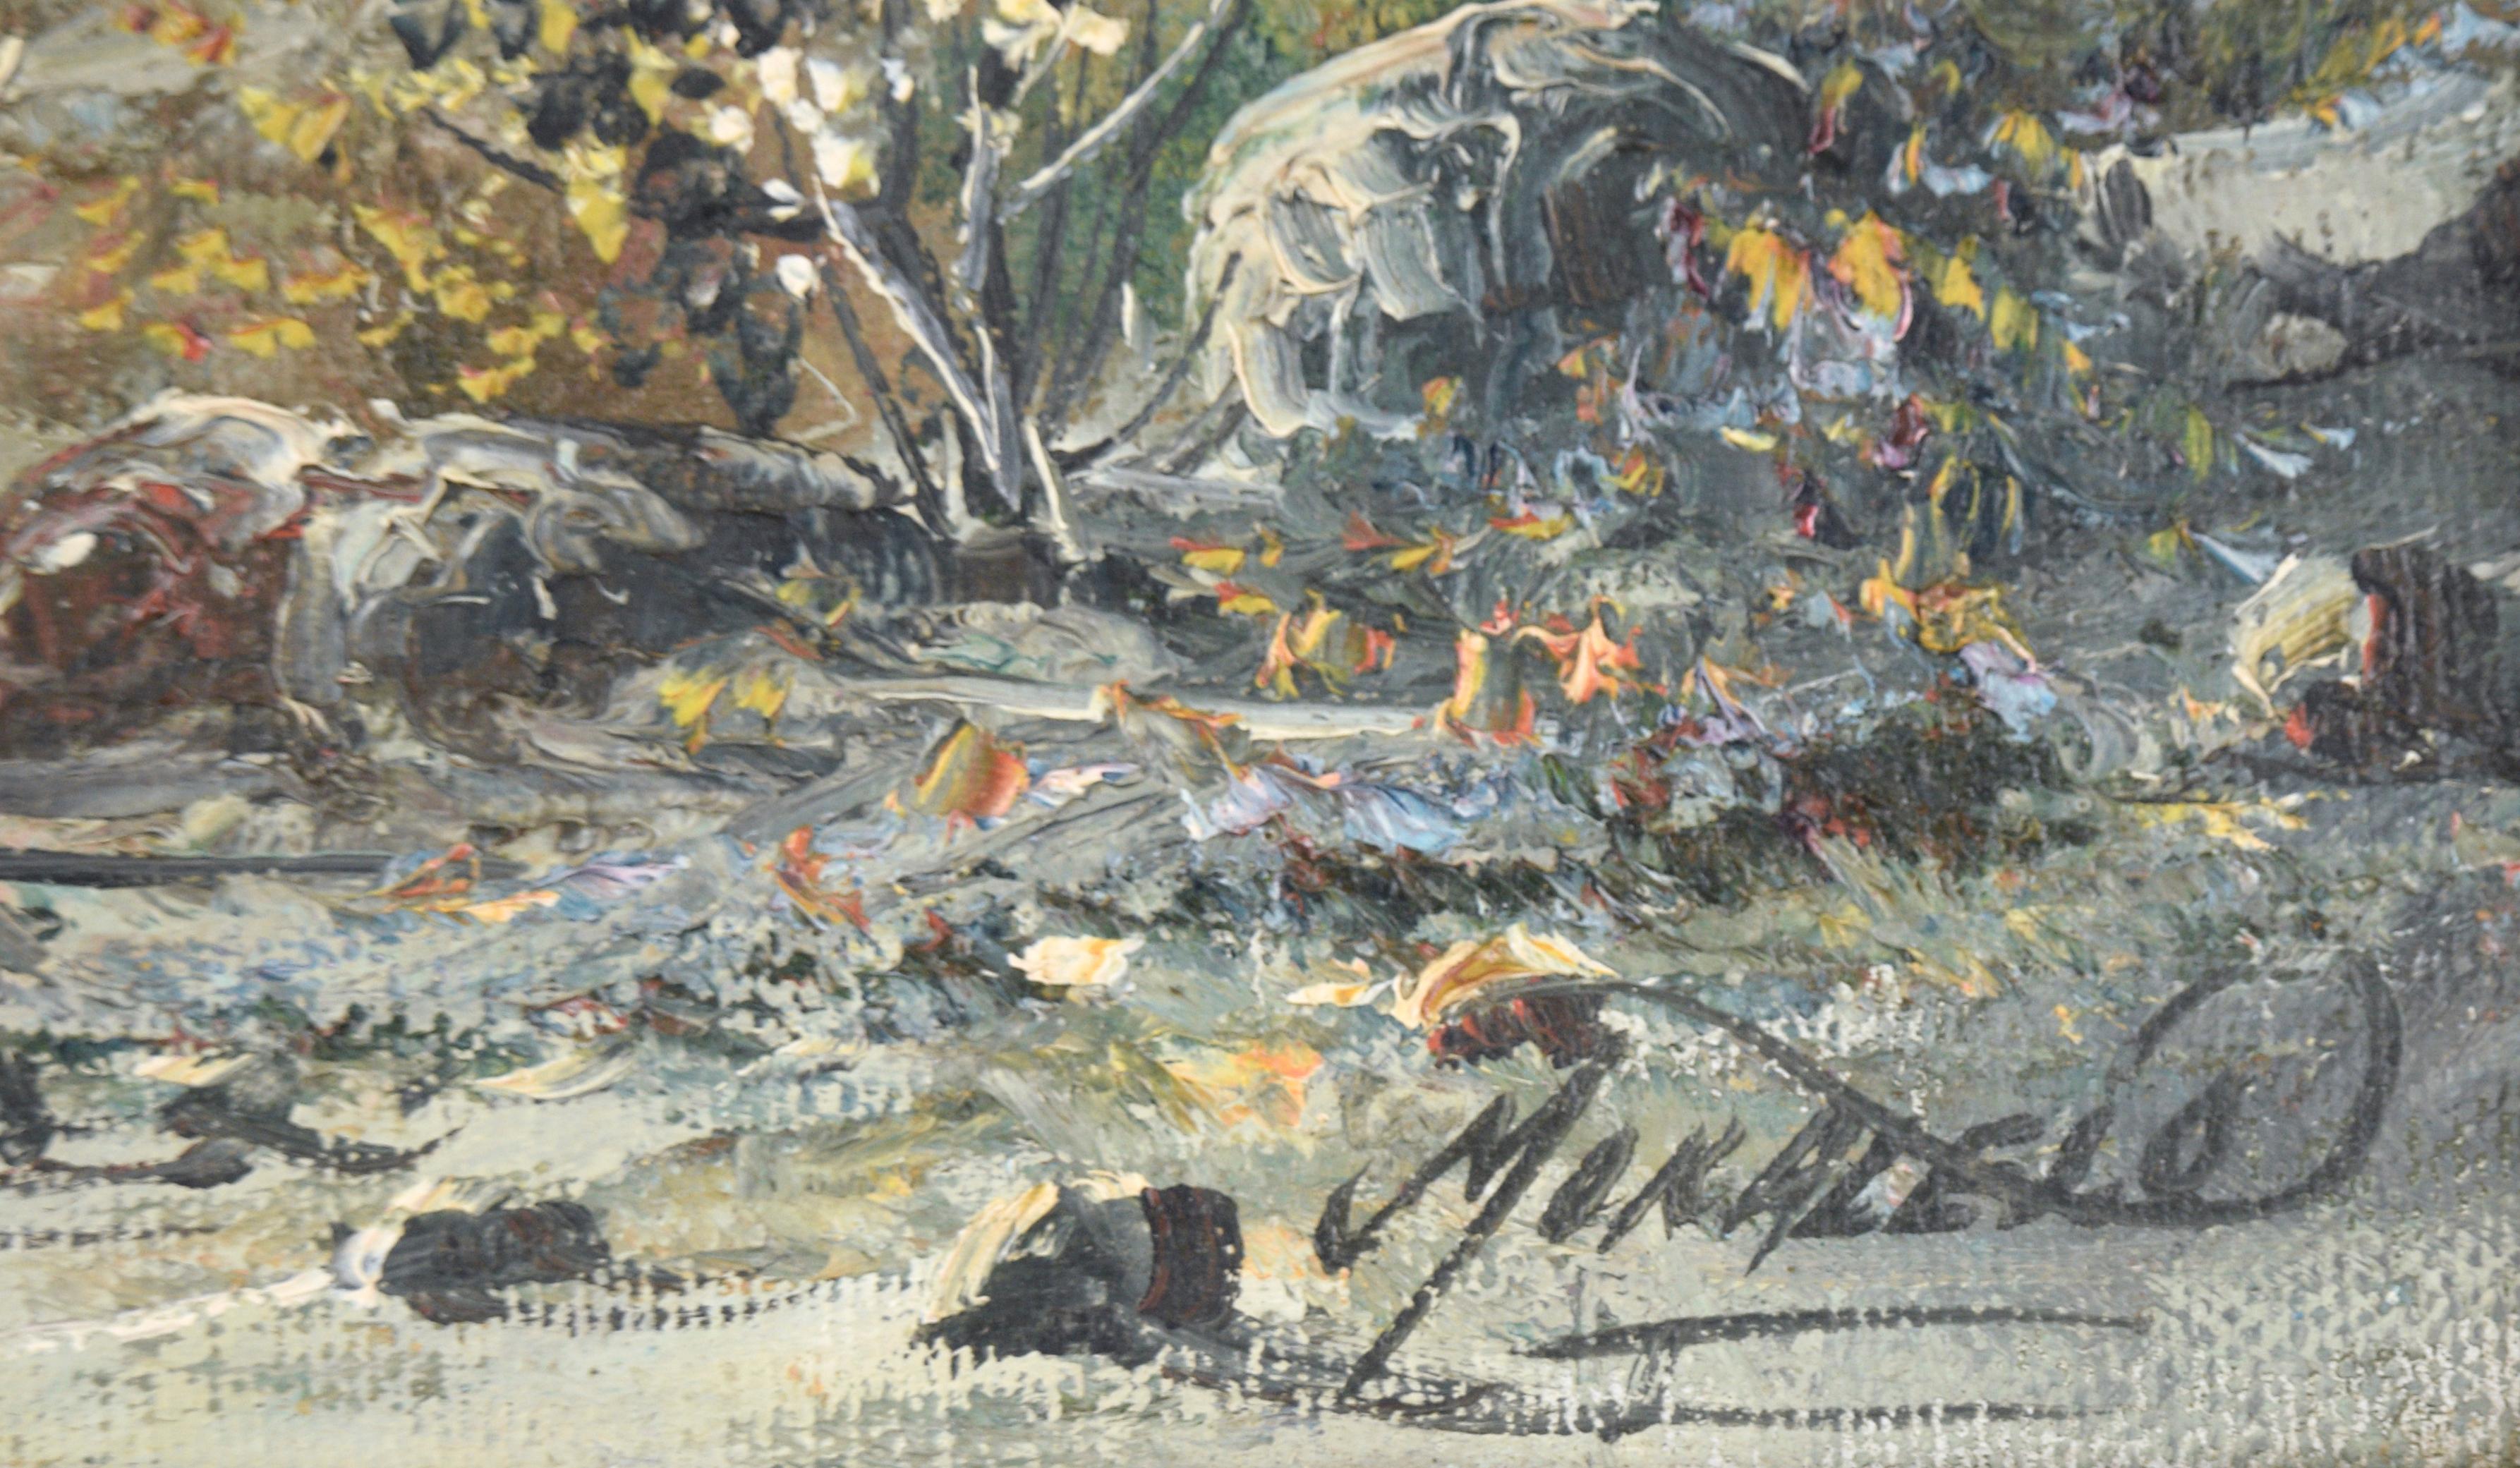 Desert Monuments - Textured Landscape - Brown Landscape Painting by Moralelo